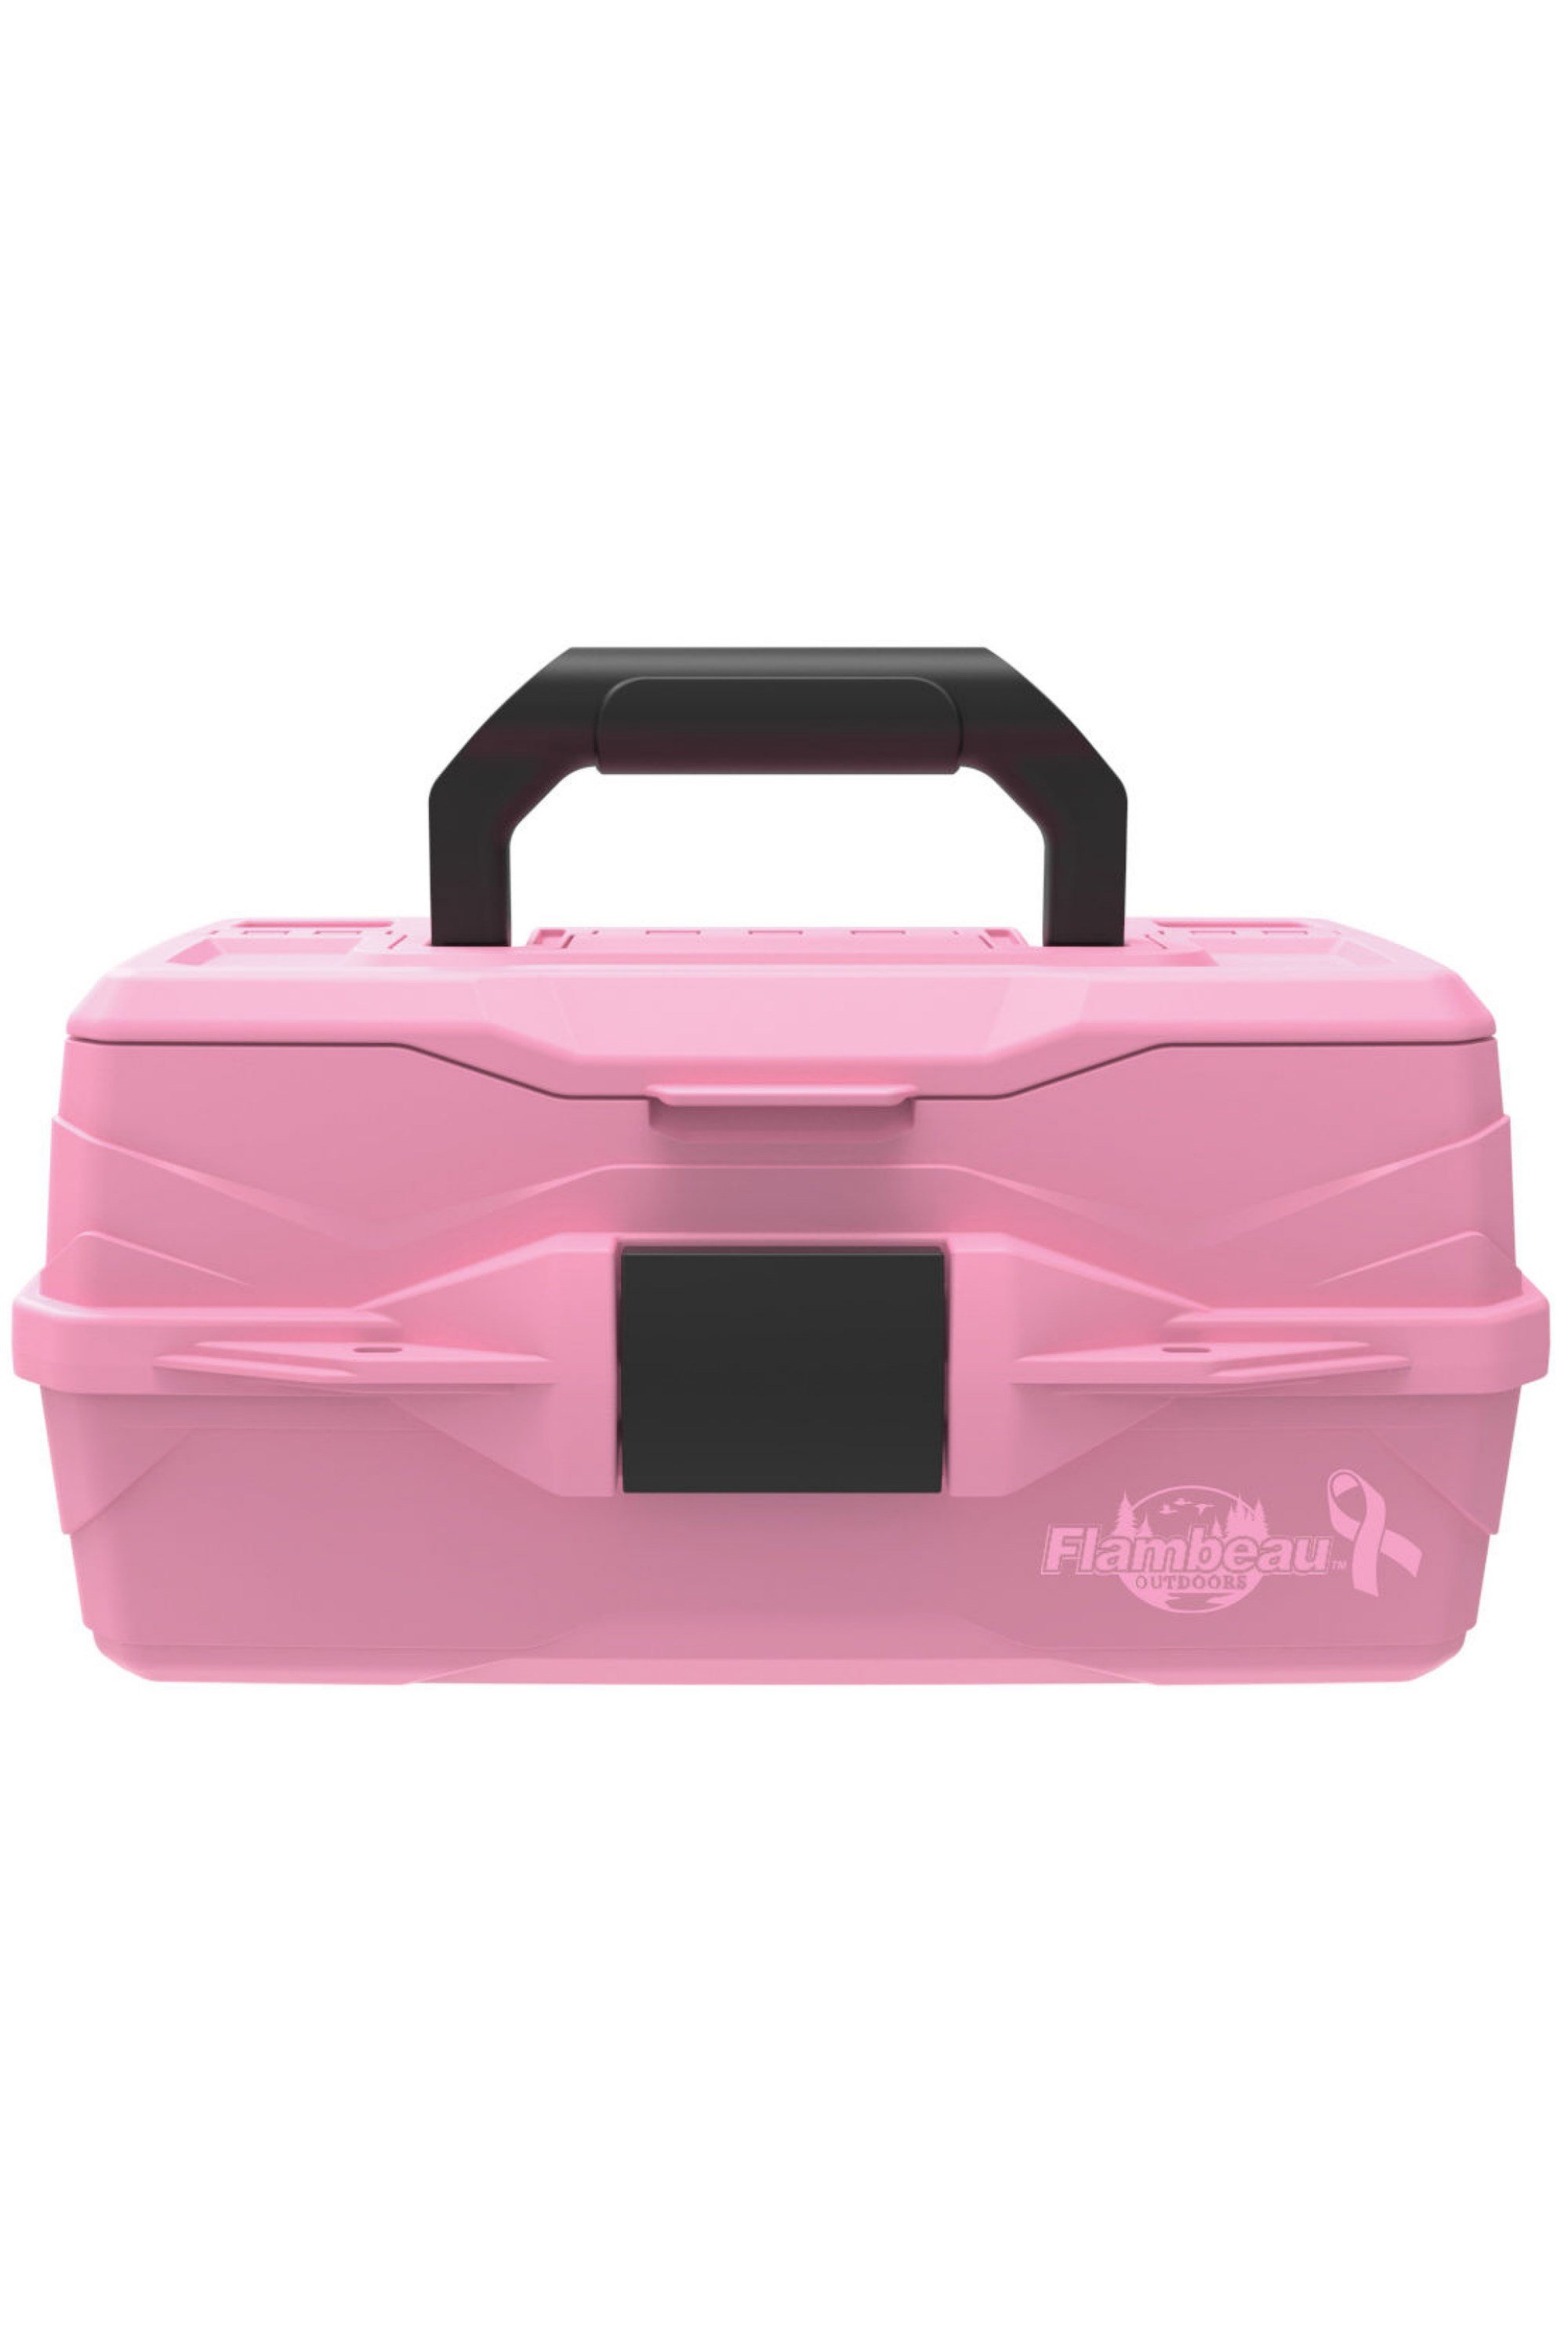 Flambeau 1 Tray Pink Tackle Box